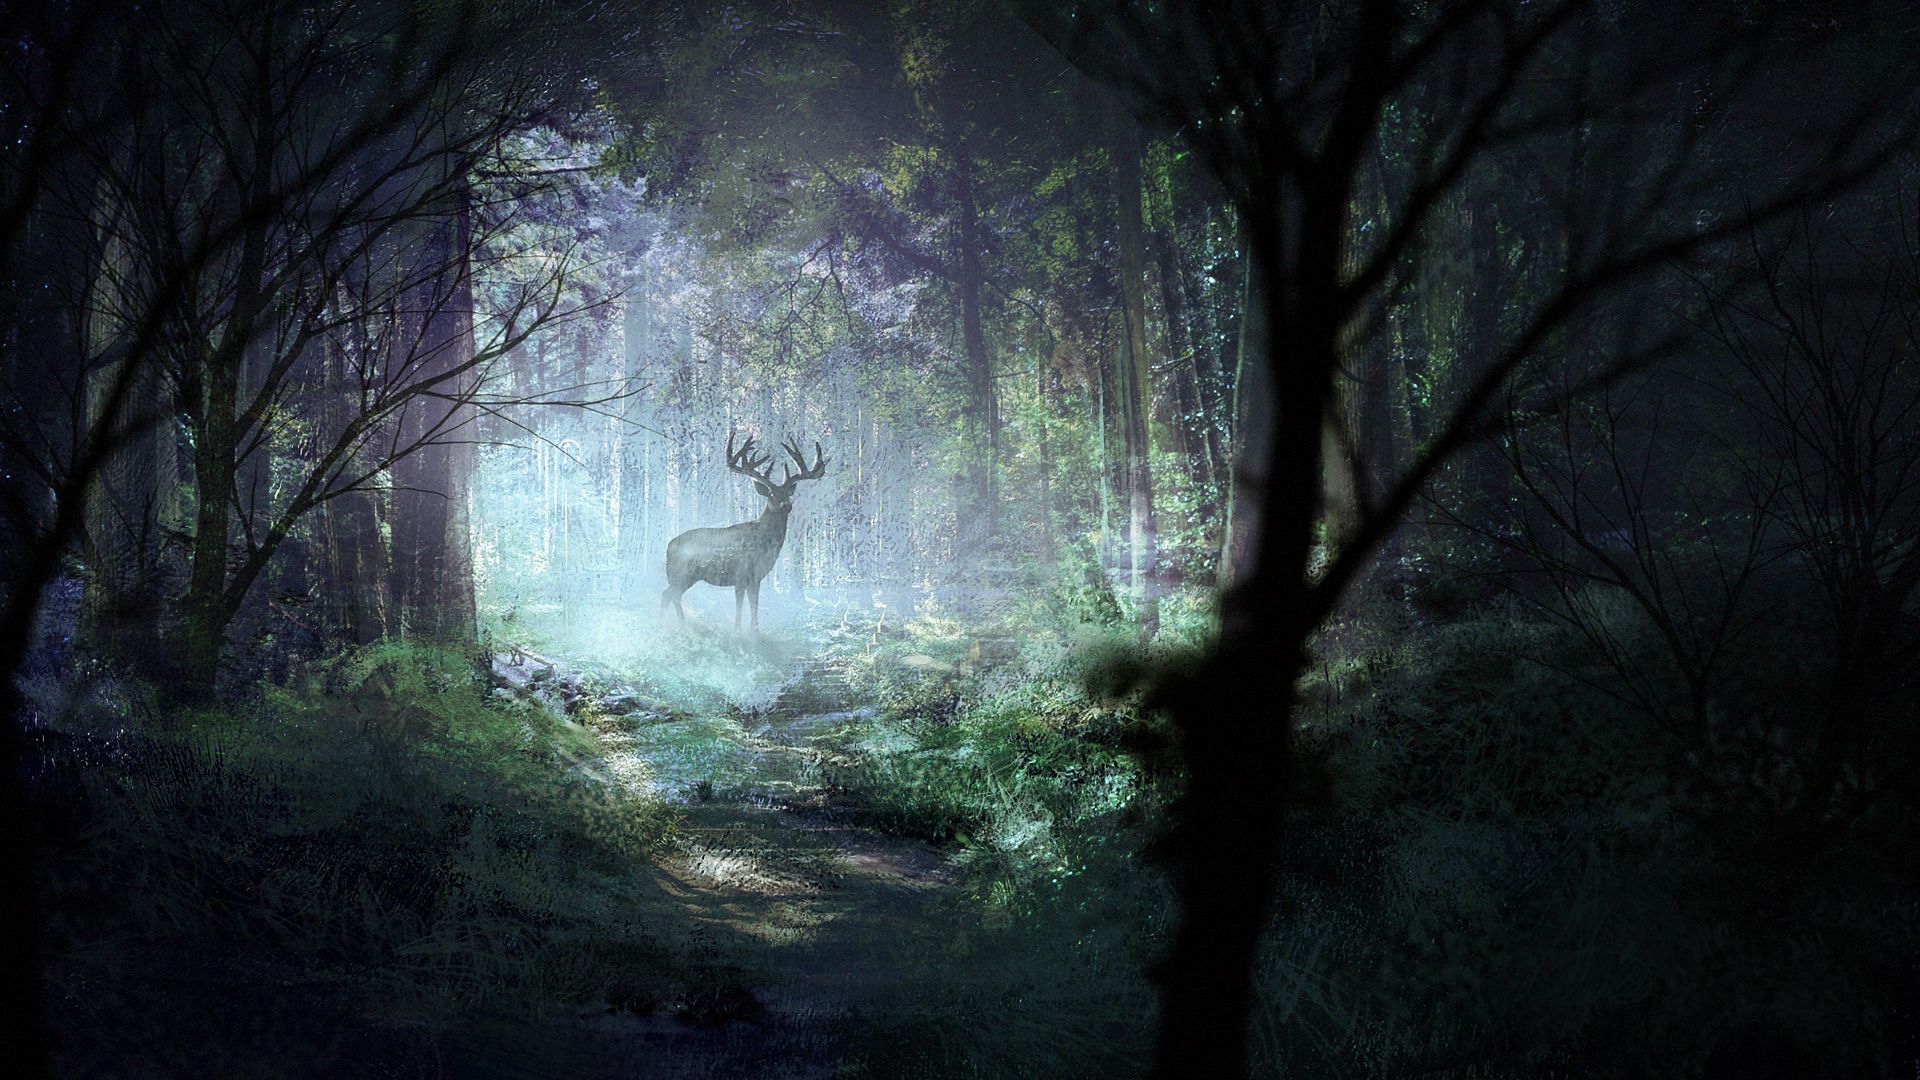 Download wallpaper 1920x1080 deer, forest, light, art, wildlife